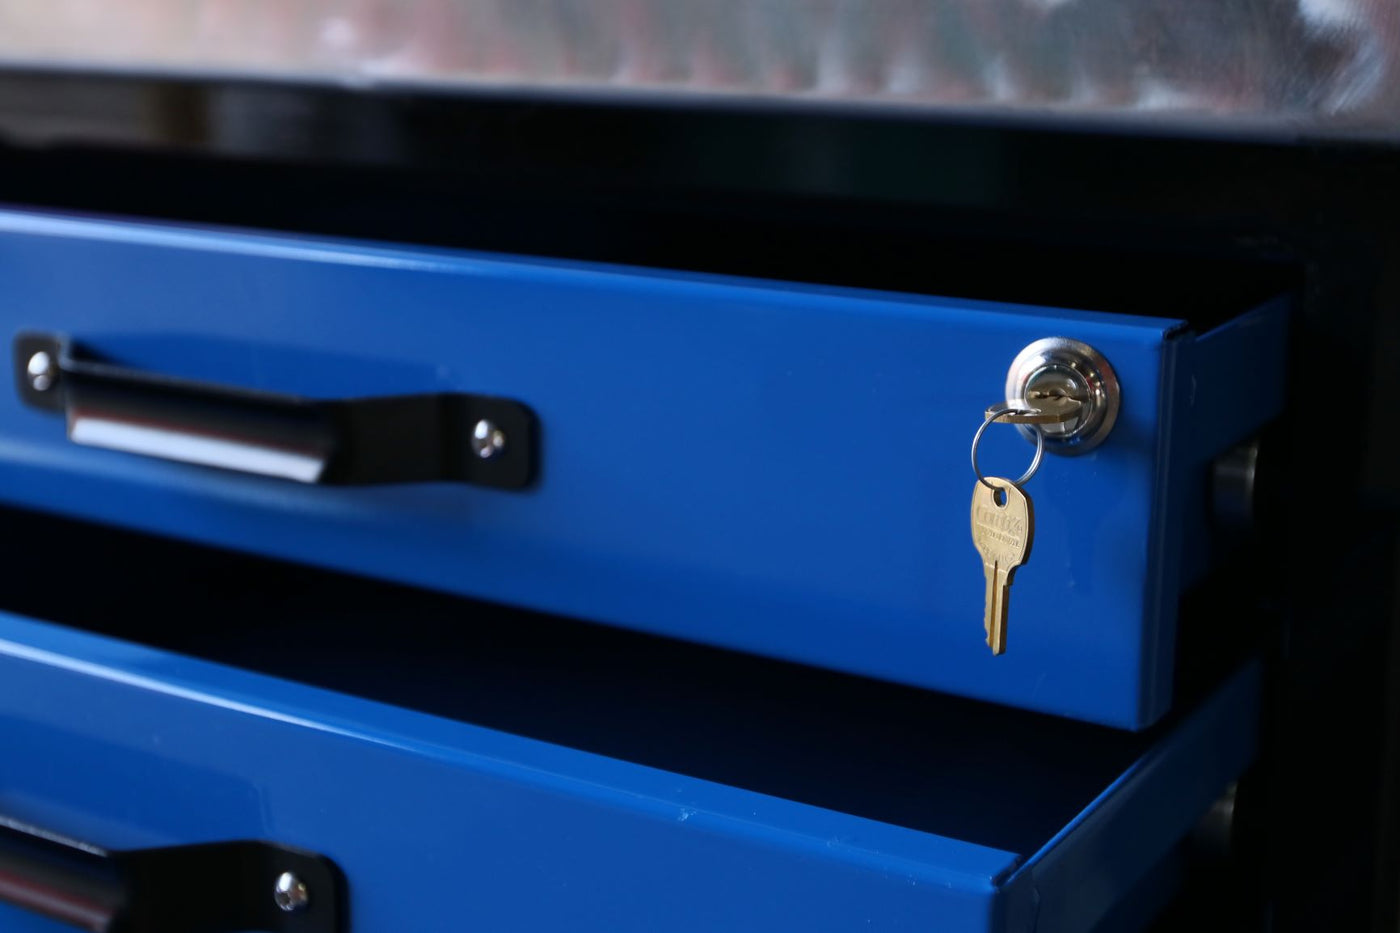 Workbench drawers with locks